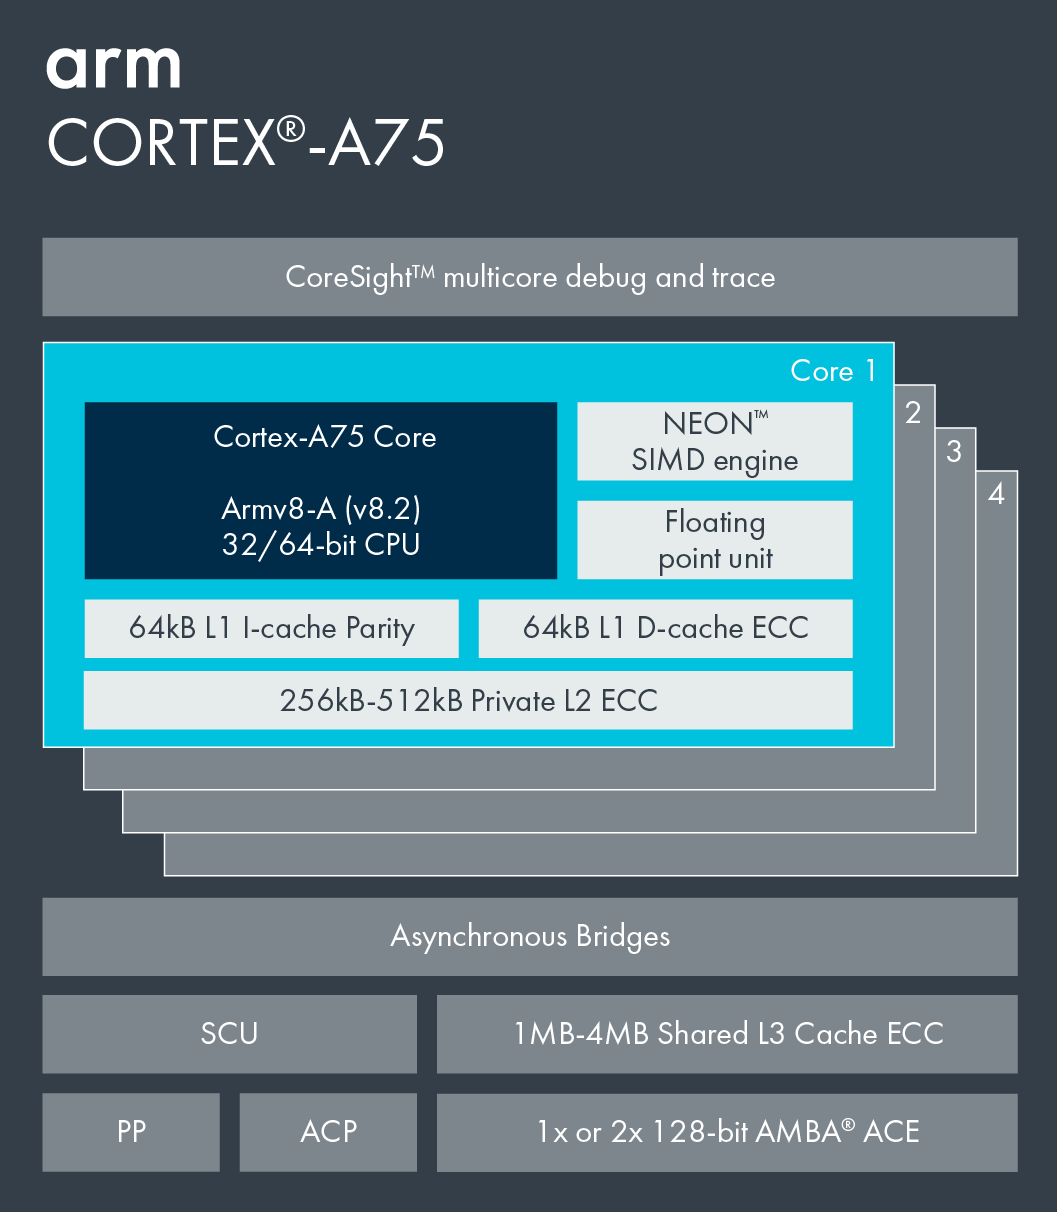 Information on Cortex-A75.